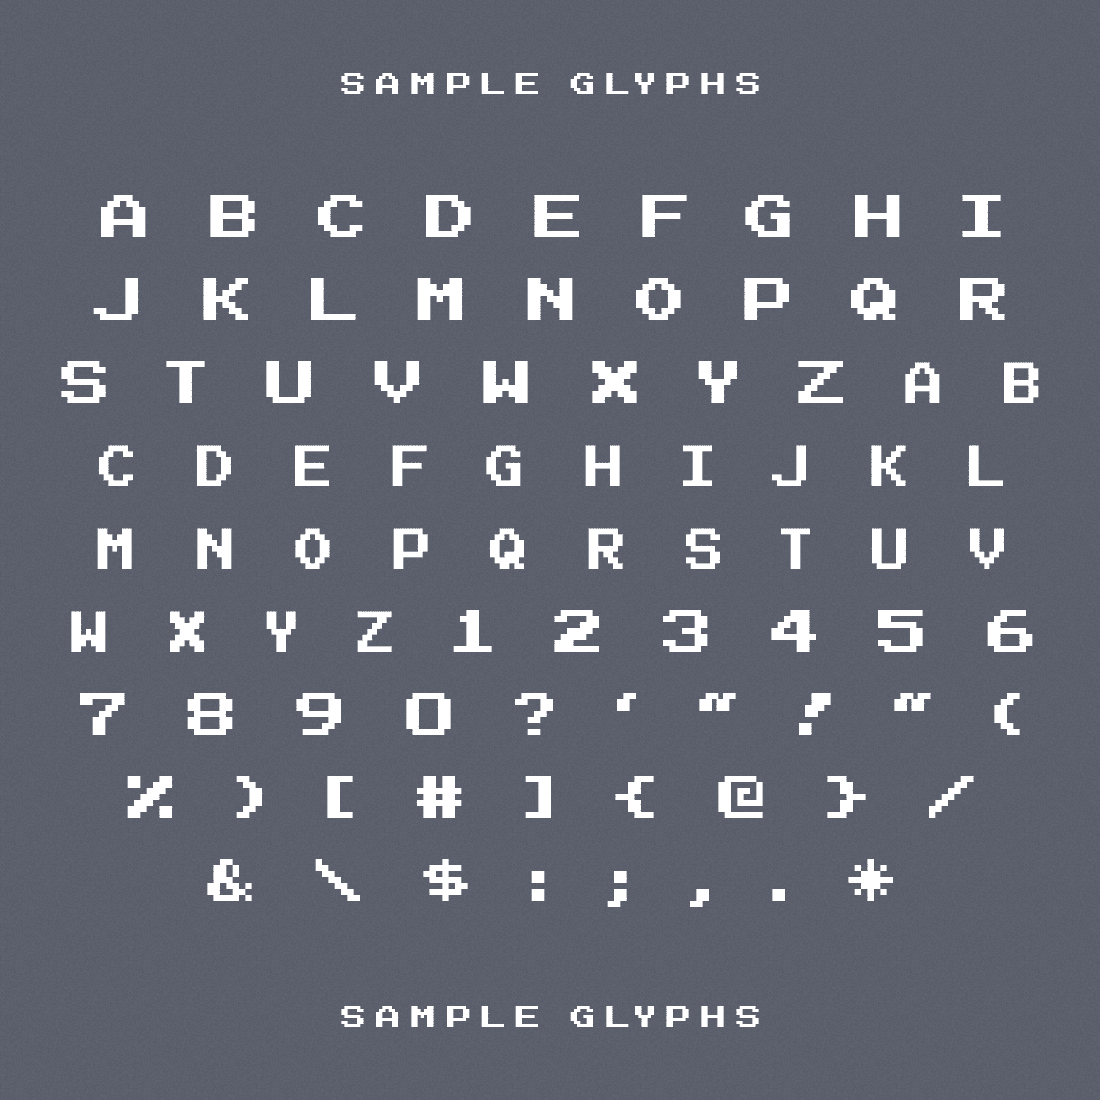 Bumblbee Pixel Font Sample Glyphs.